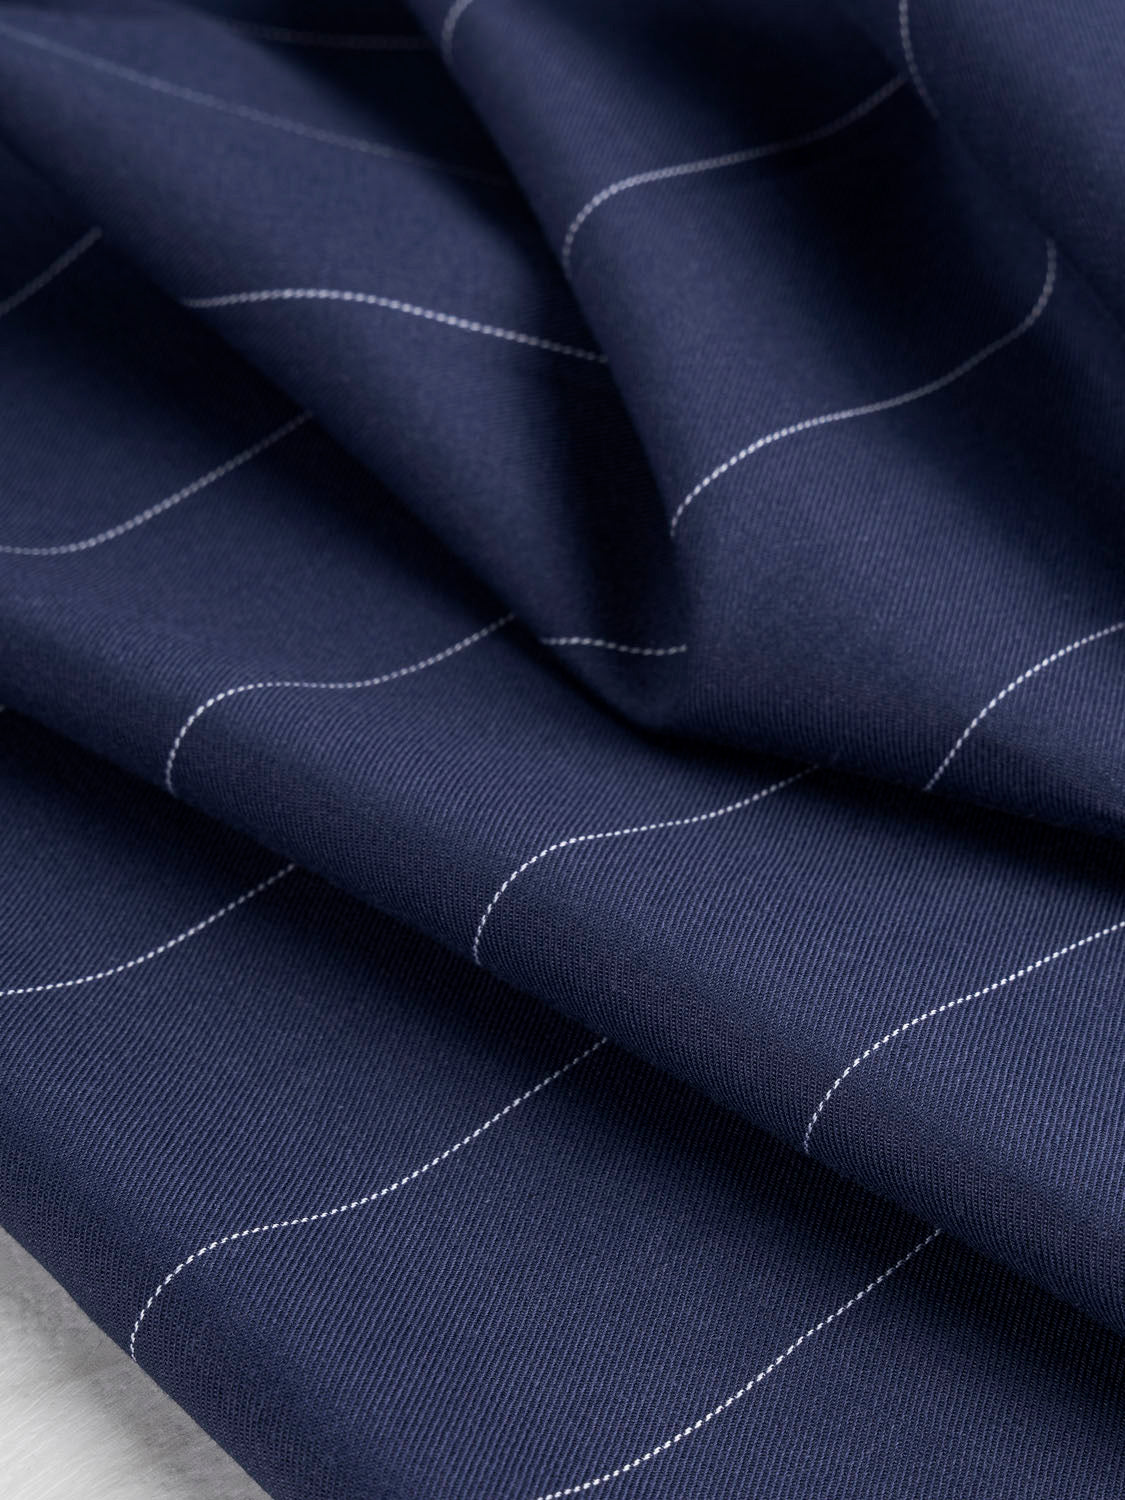 Yarn Dyed Pinstripe Cotton Shirting Twill - Navy + White | Core Fabrics